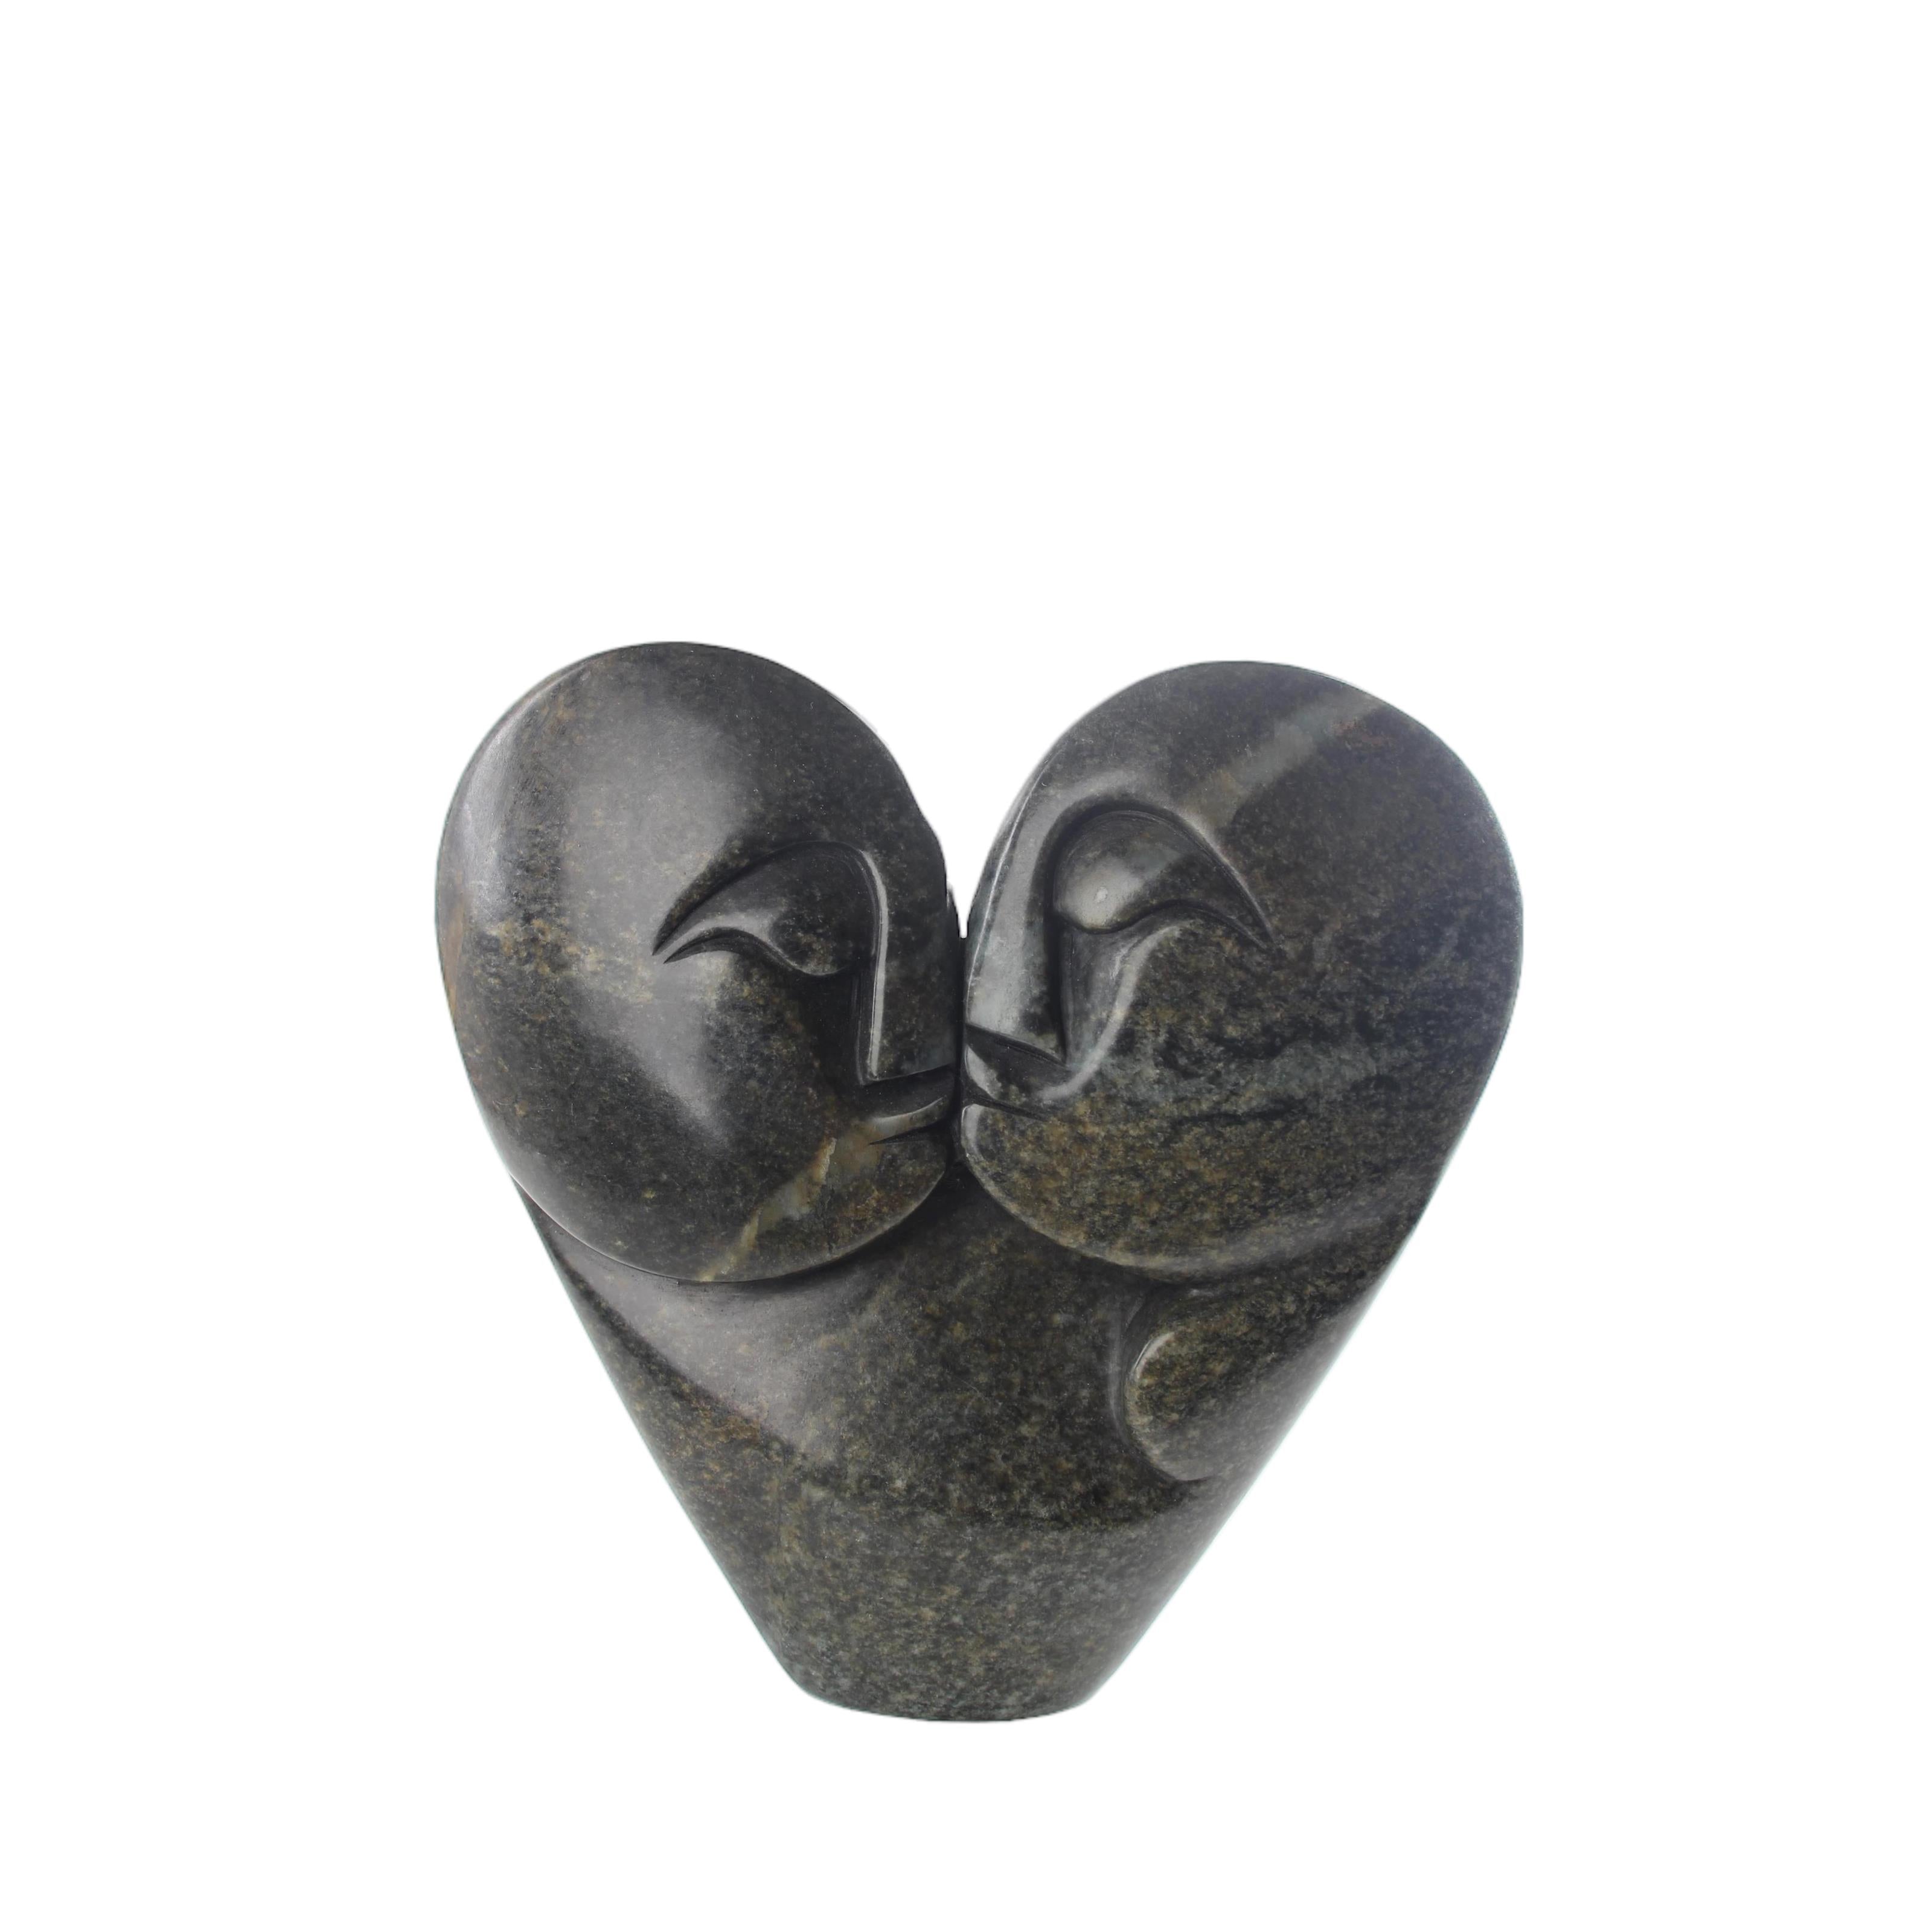 Shona Tribe Serpentine Stone Lovers ~7.1" Tall